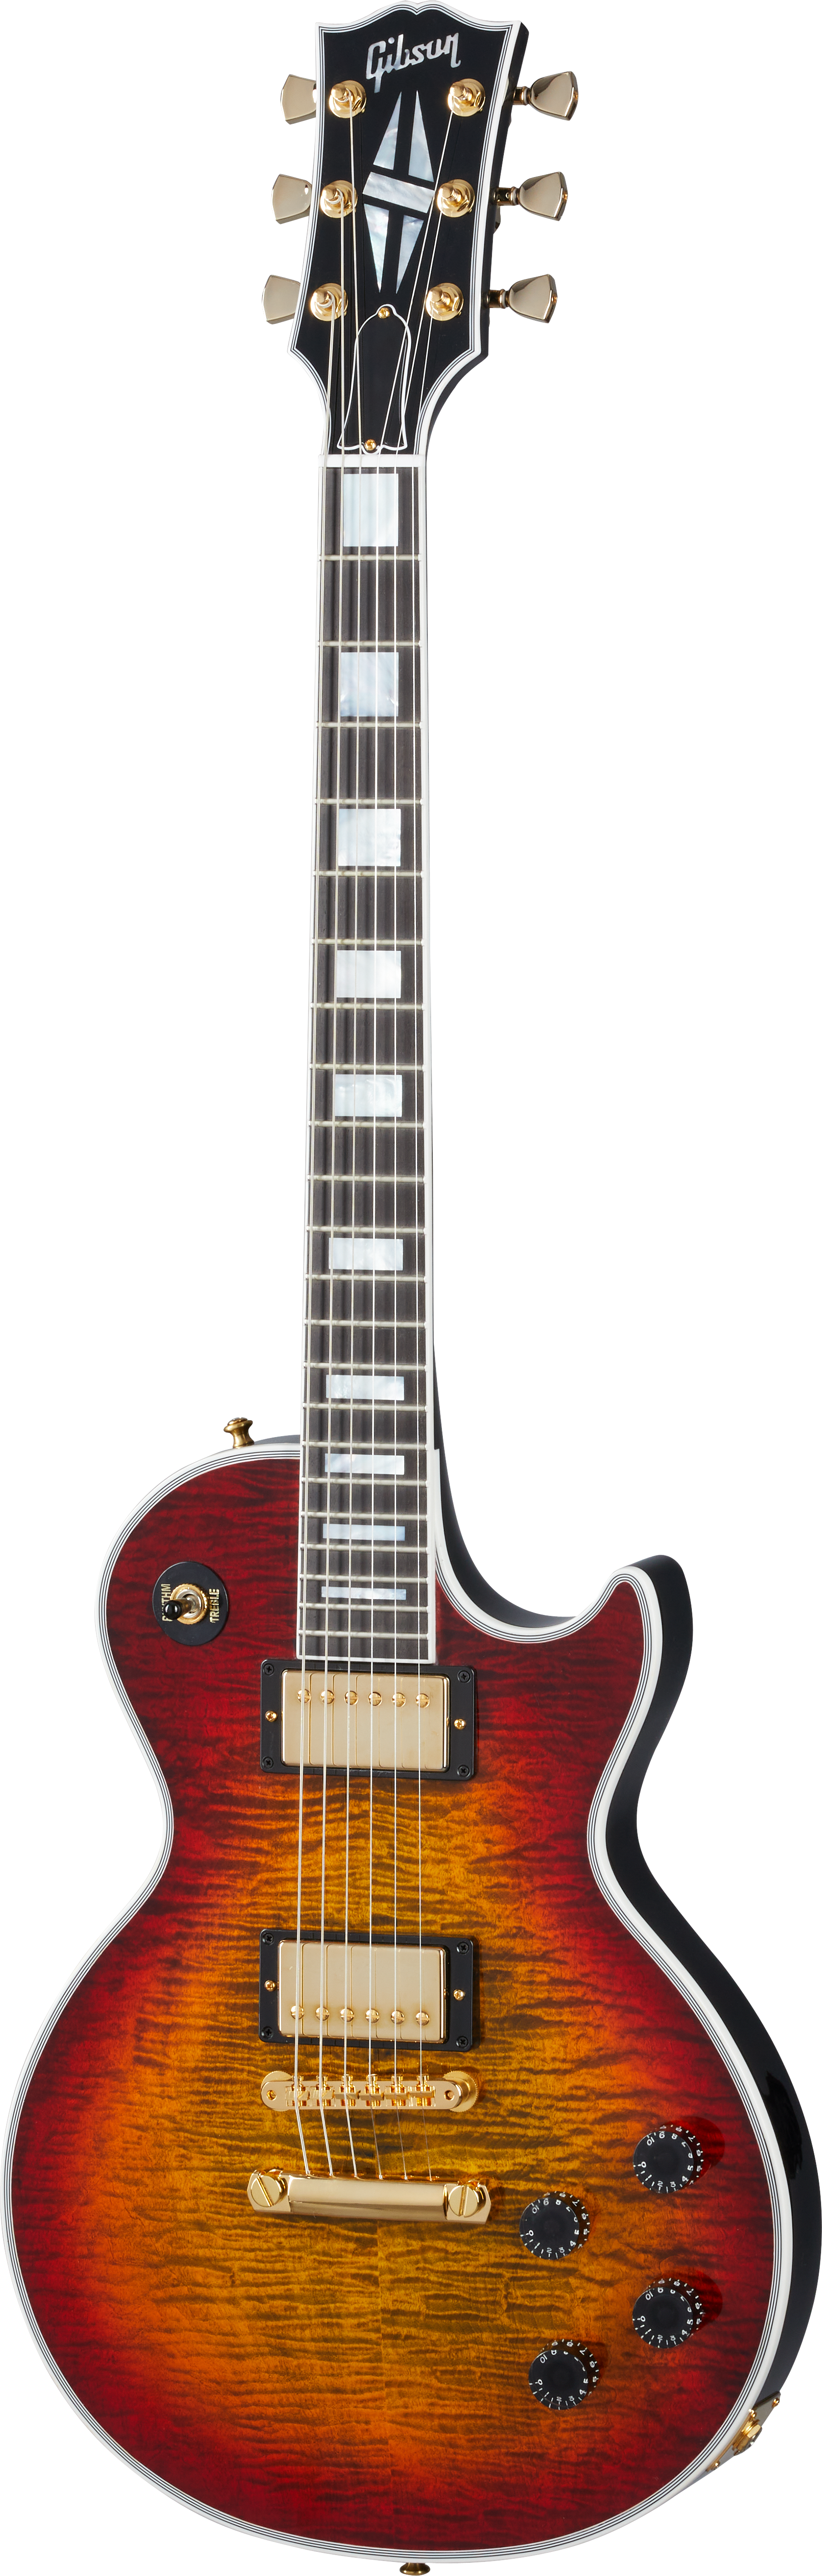 Full frontal of Gibson Custom Shop Les Paul Axcess Custom Figured Top Bengal Burst.